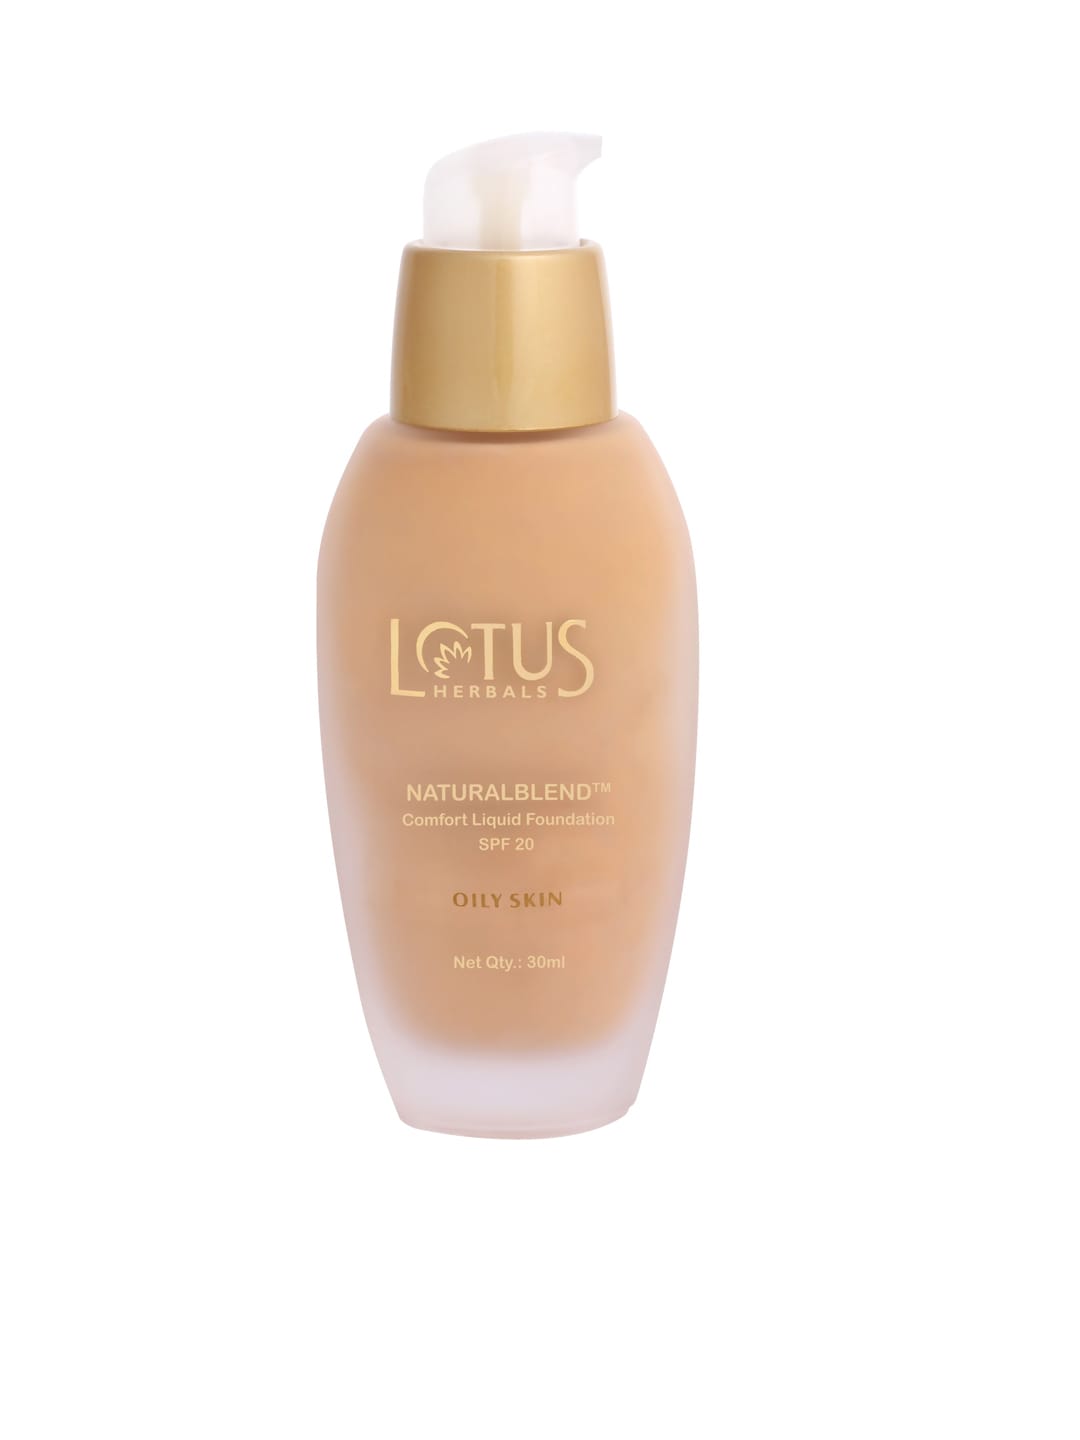 Lotus Herbals Natural Blend Comfort Liquid Sand Foundation 310